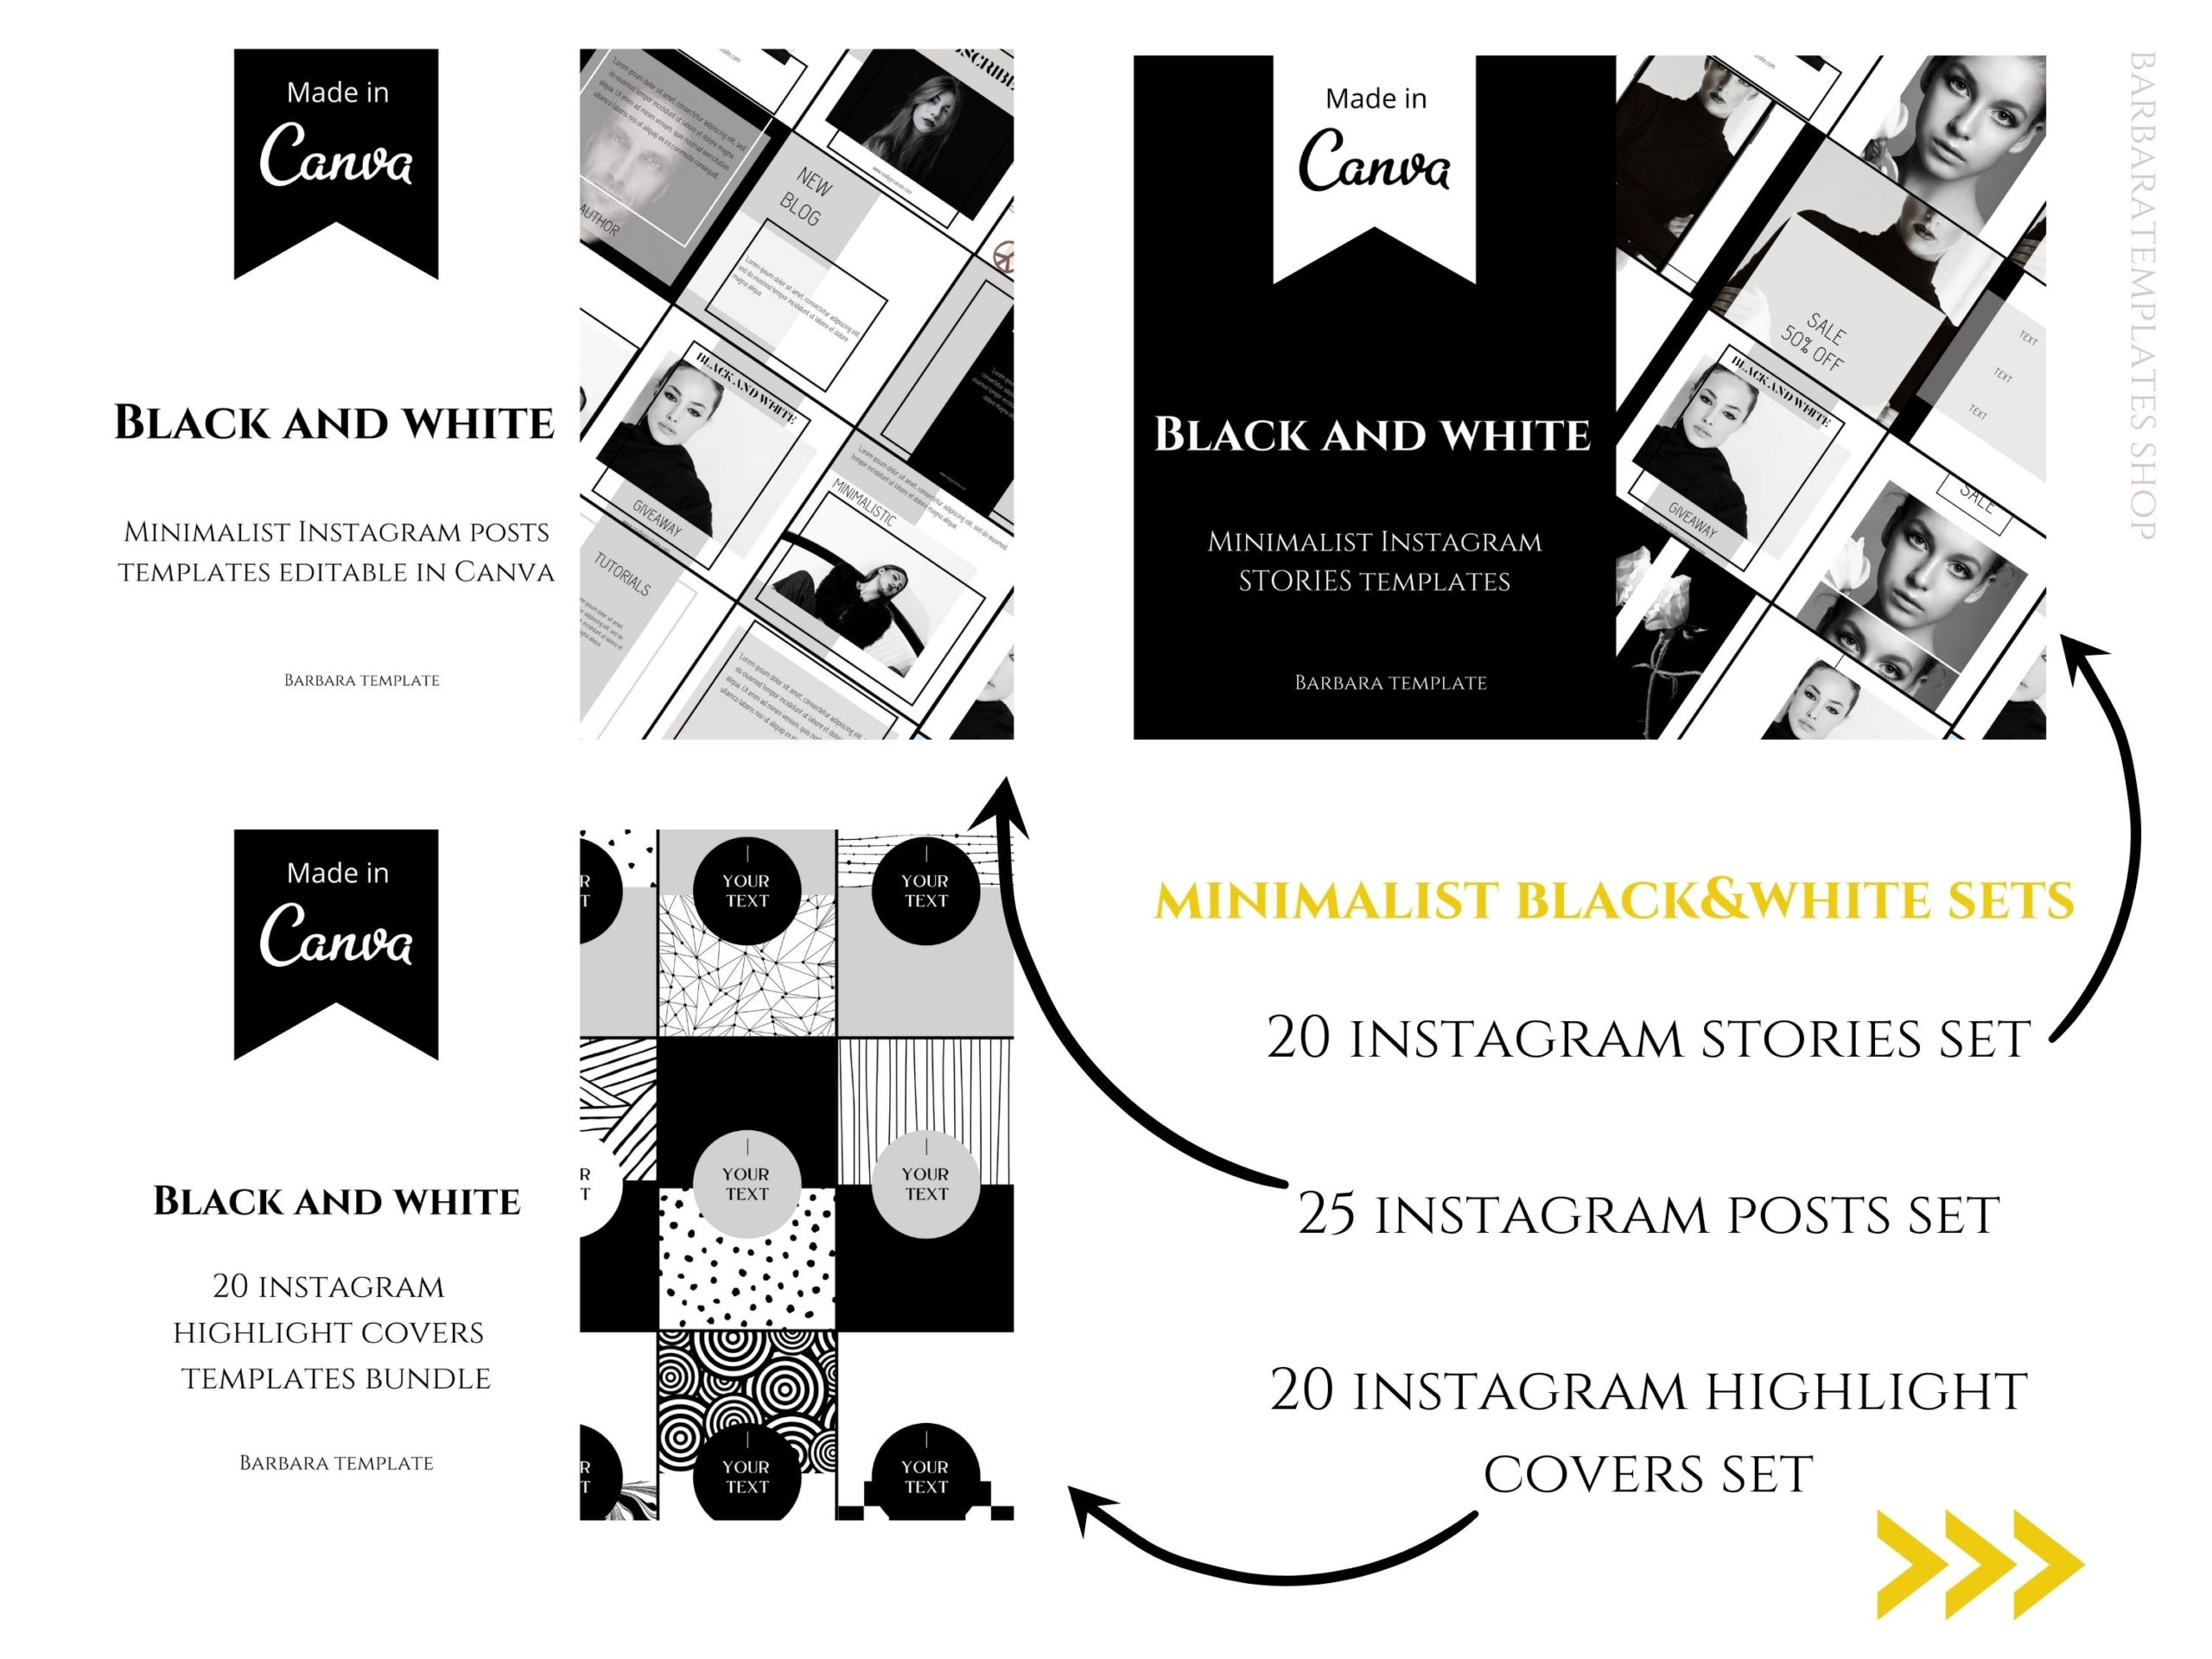 Minimalist Black and White mega pack bundle of templates